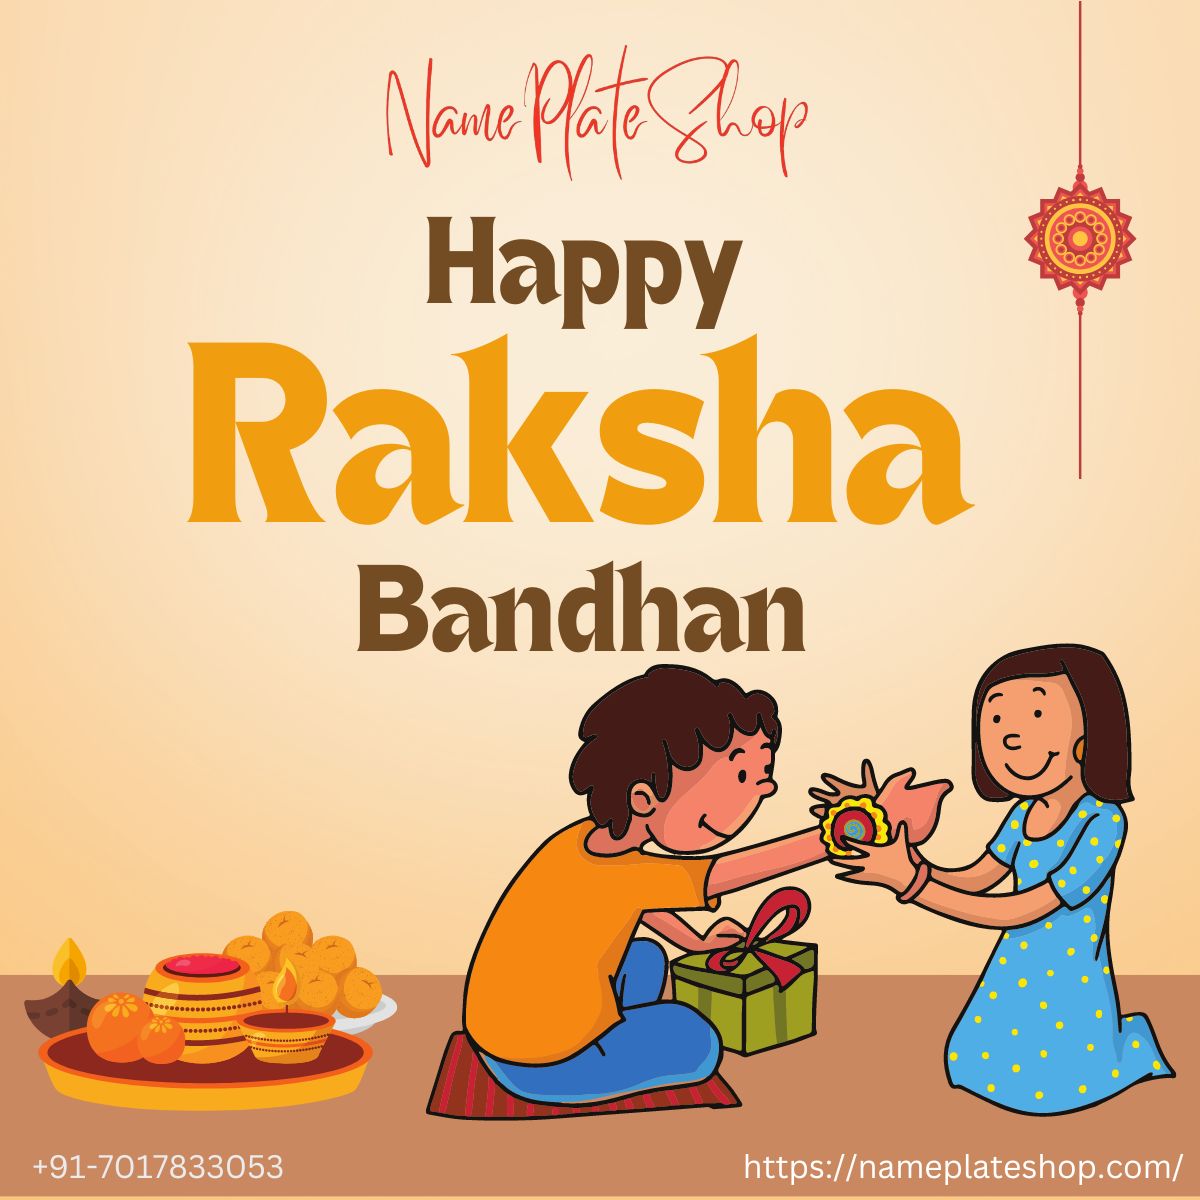 Happy Raksha Bandhan To All Of You